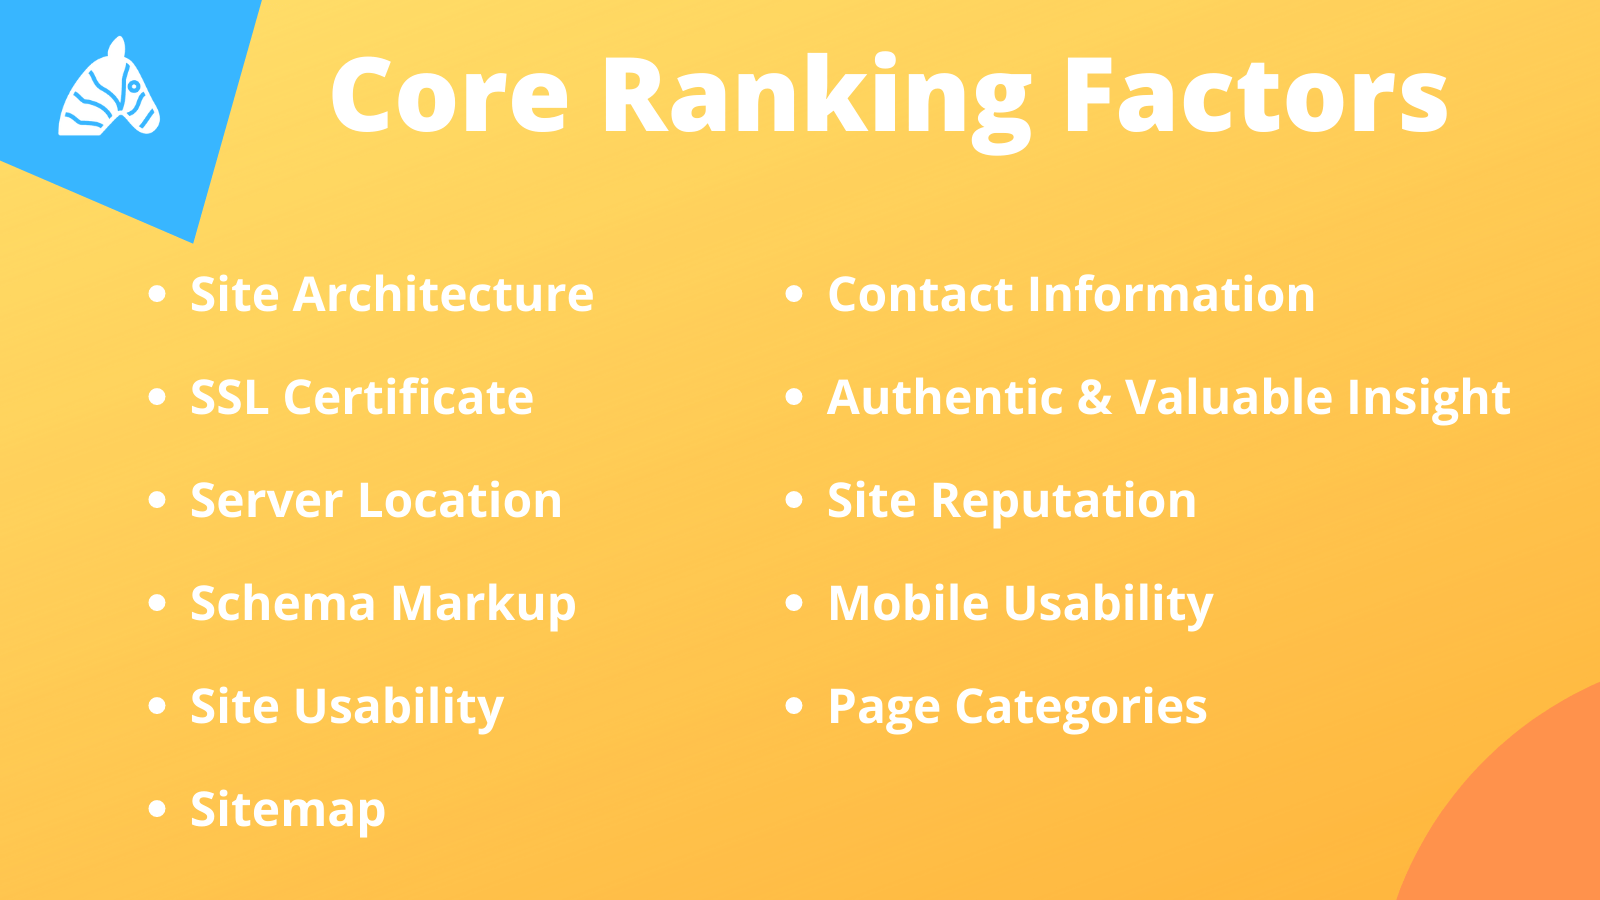 core ranking factors 2020